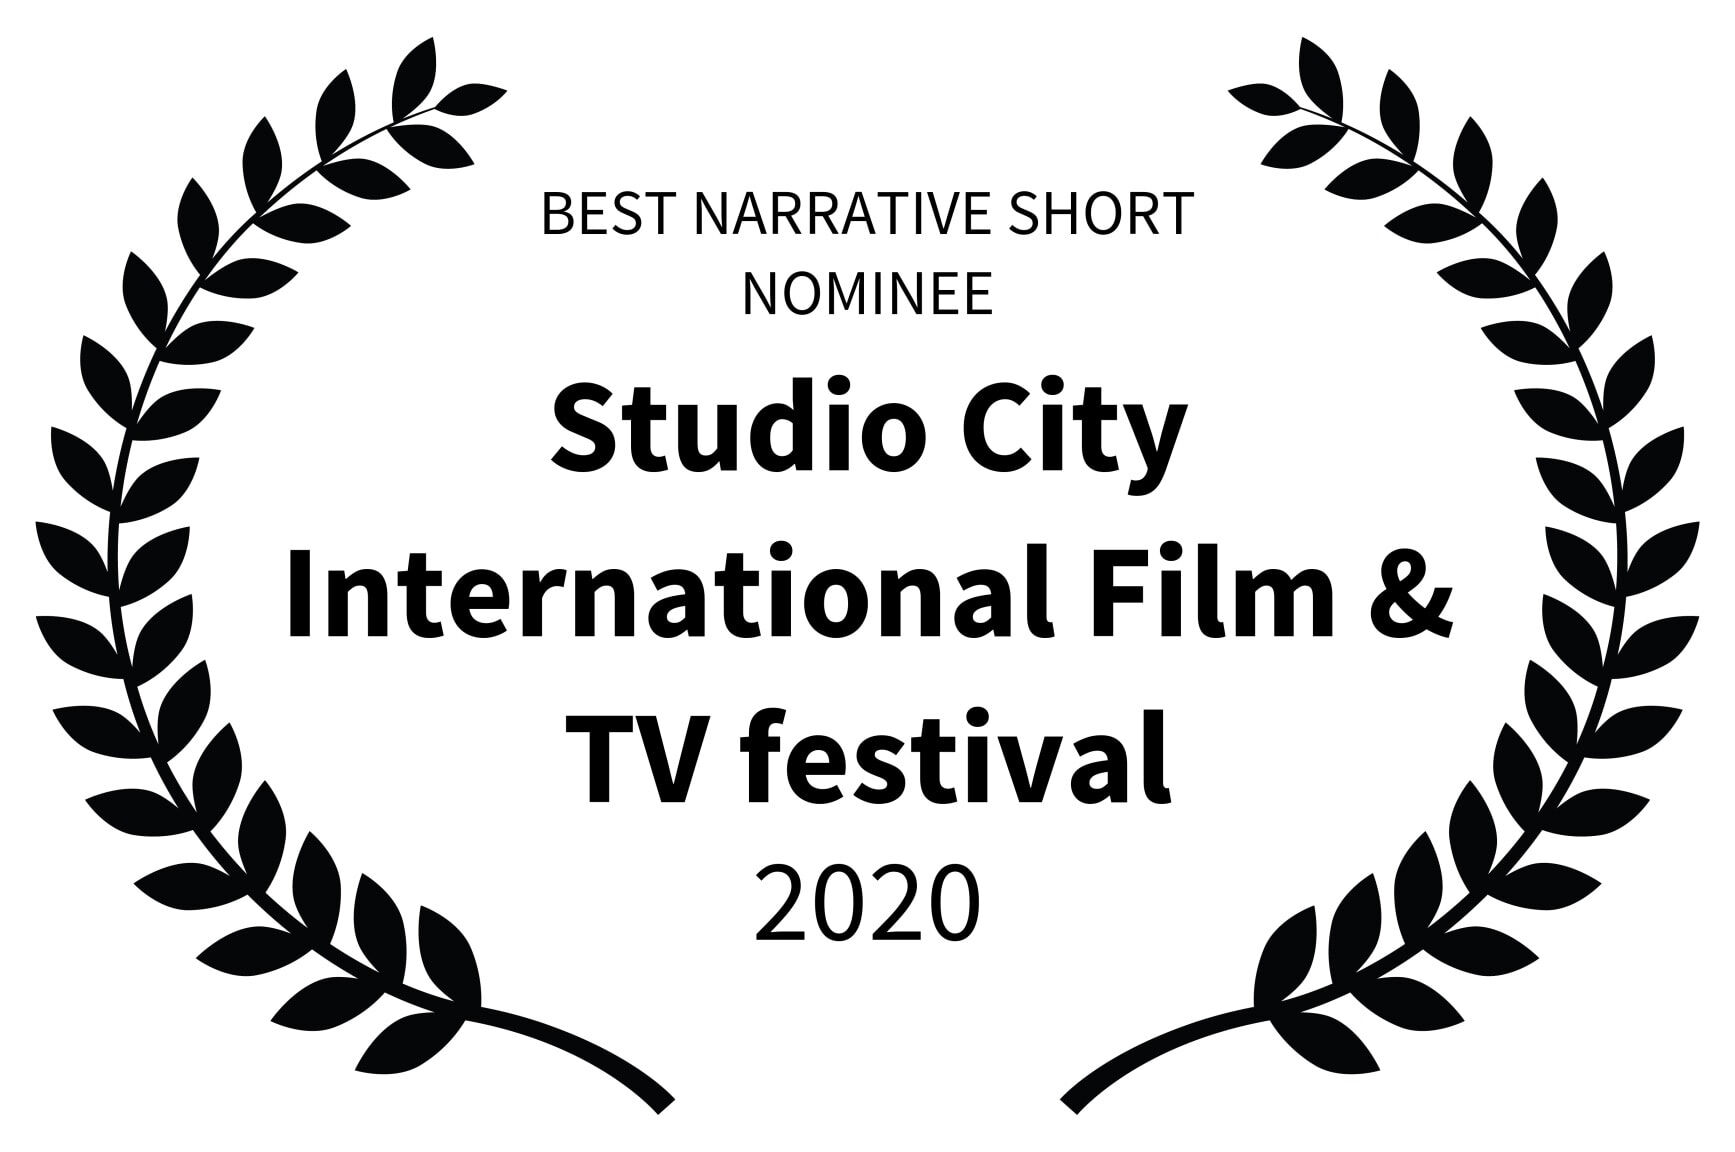 BEST NARRATIVE SHORT NOMINEE - Studio City International Film  TV festival - 2020